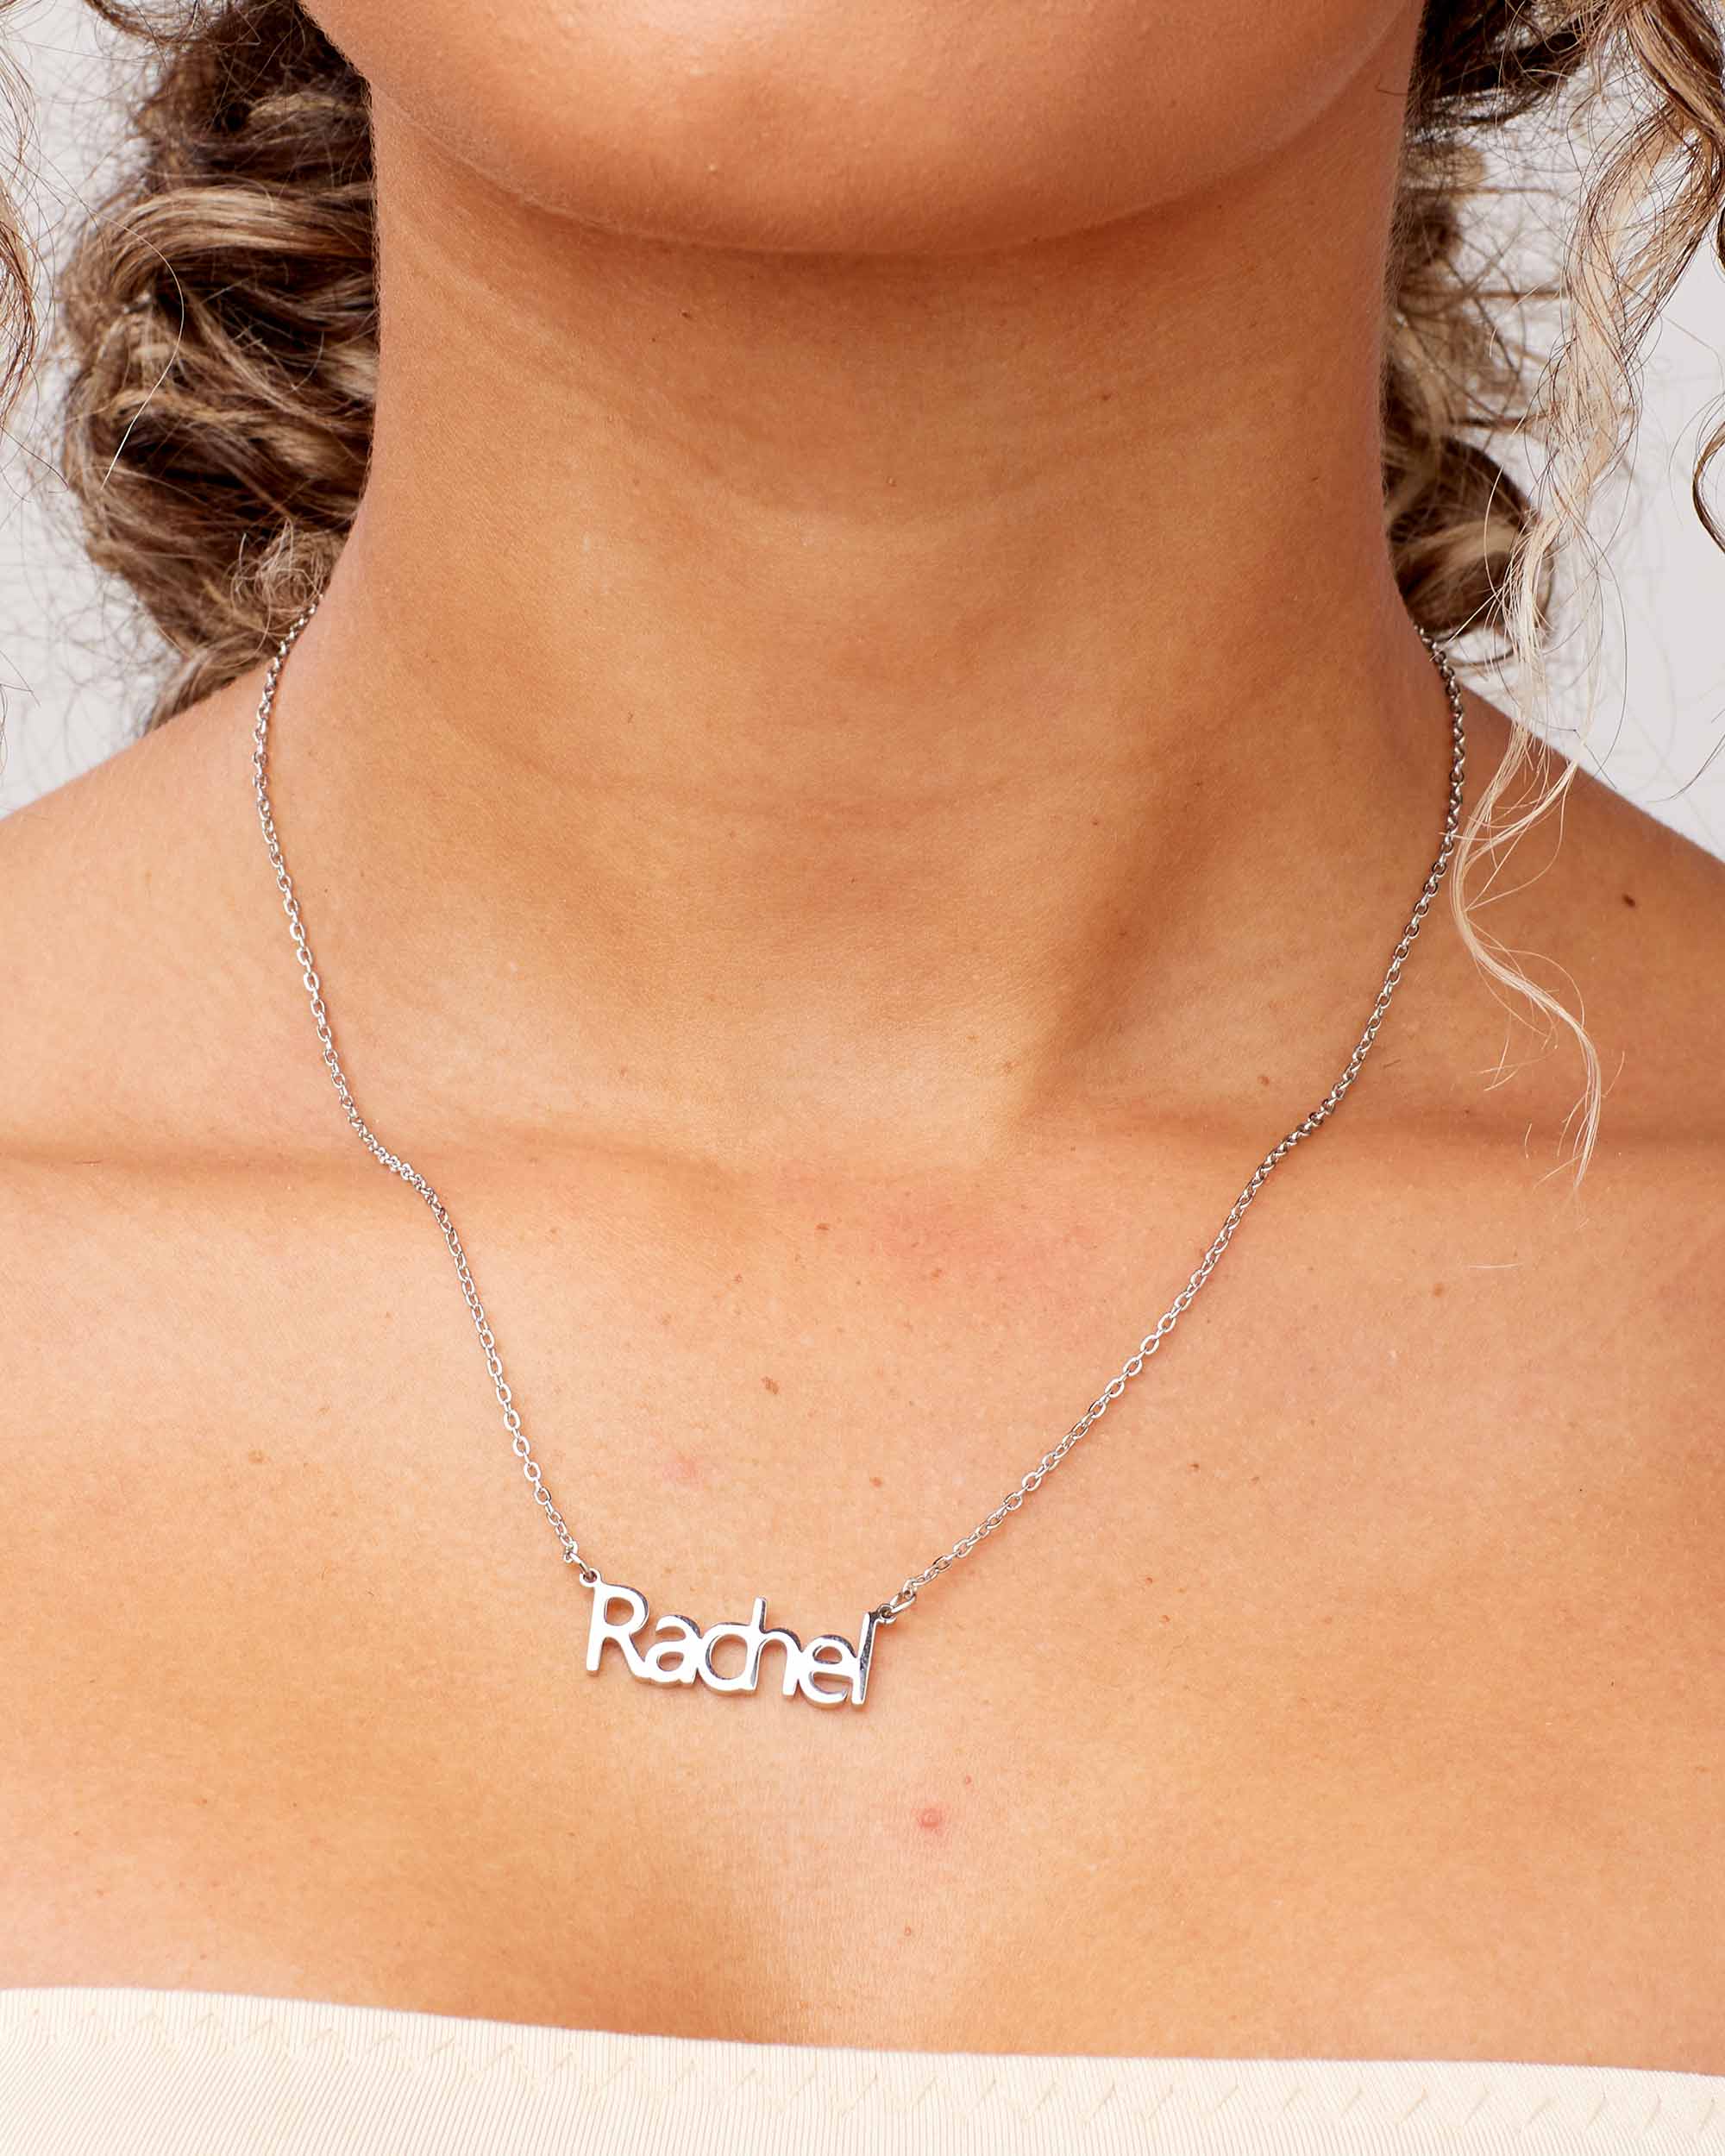 Swiss Custom Name Necklace